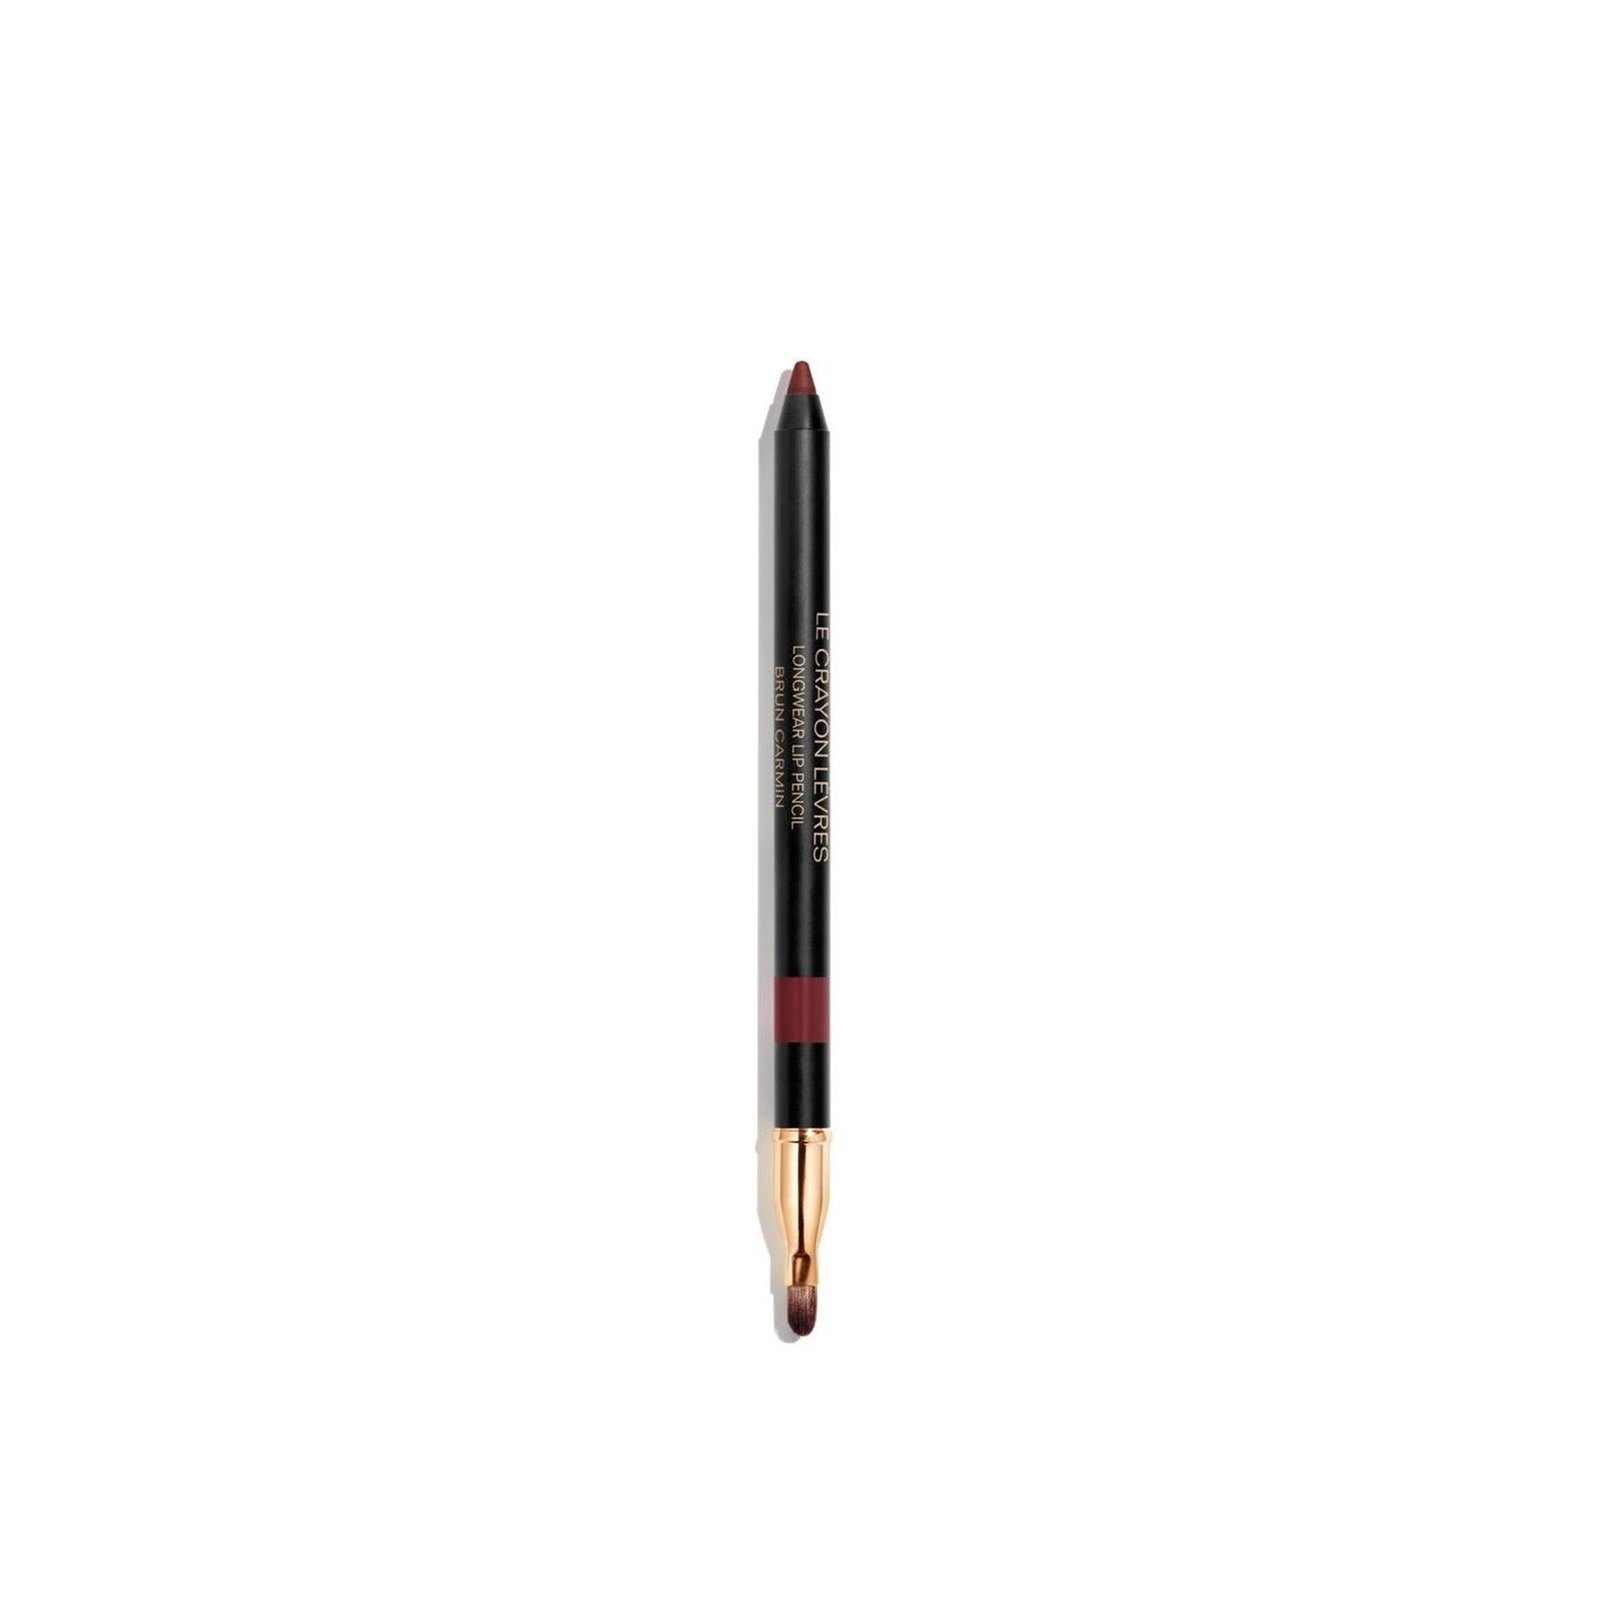 CHANEL Le Crayon Lèvres Longwear Lip Pencil 188 Brun Carmin 1.2g (0.04 oz)